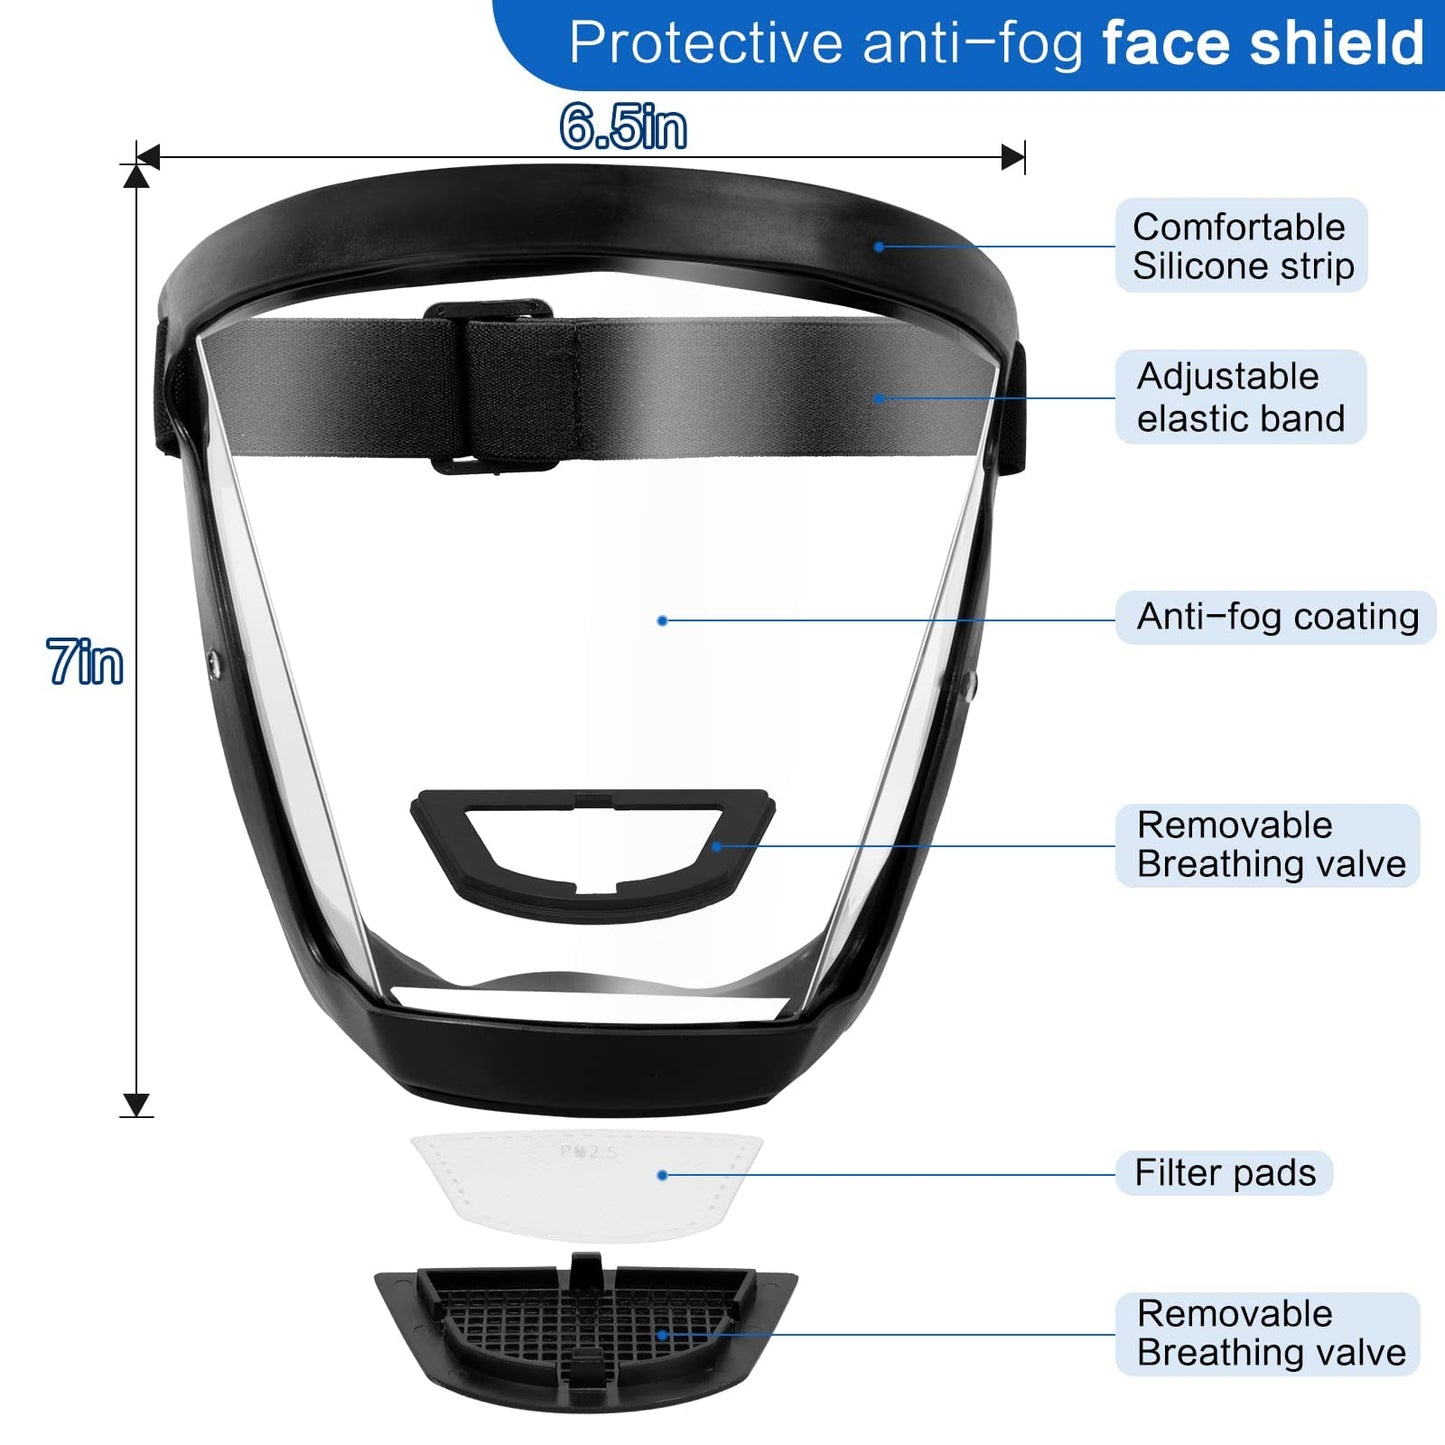 Super Protective Anti-fog Face Shield